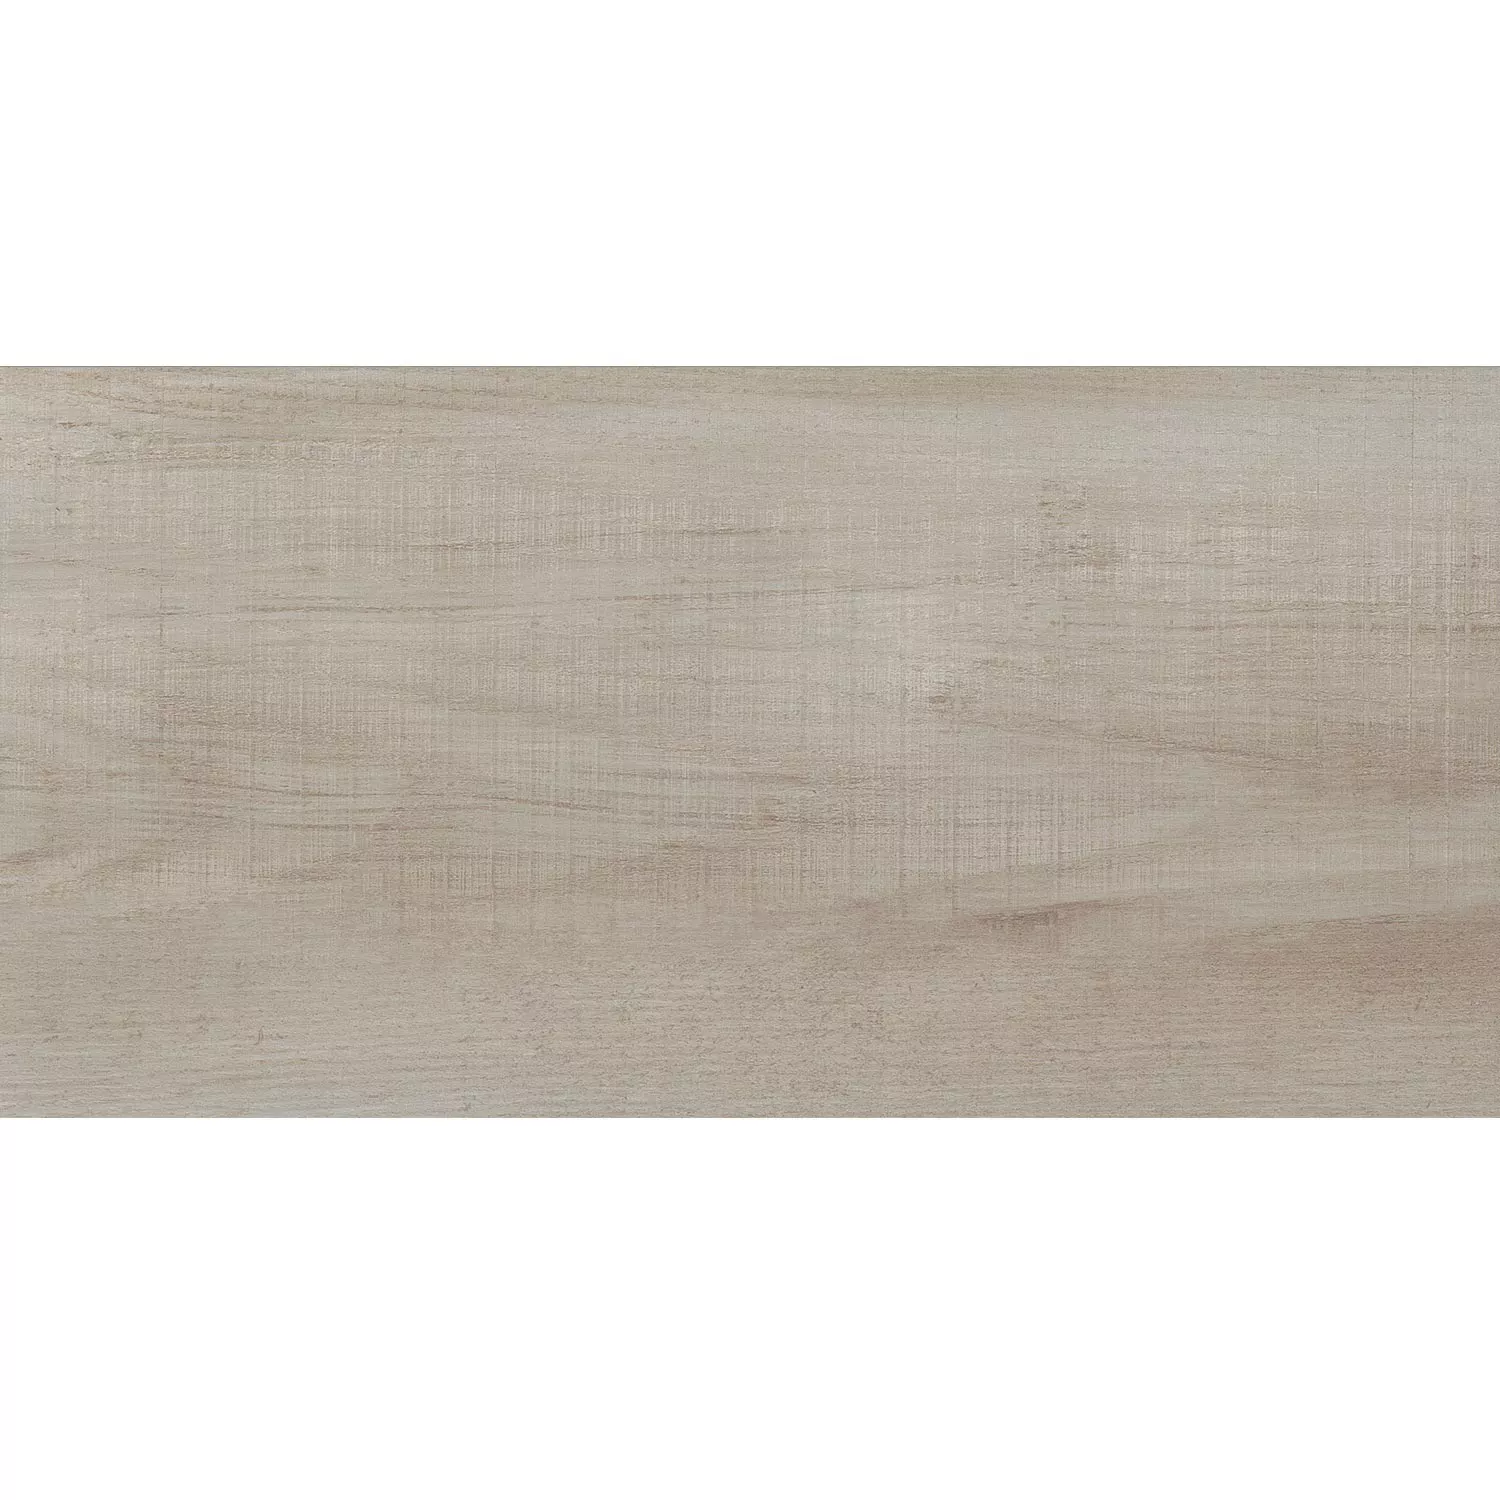 Sample Floor Tiles Wood Optic Nikopol 30x60cm White